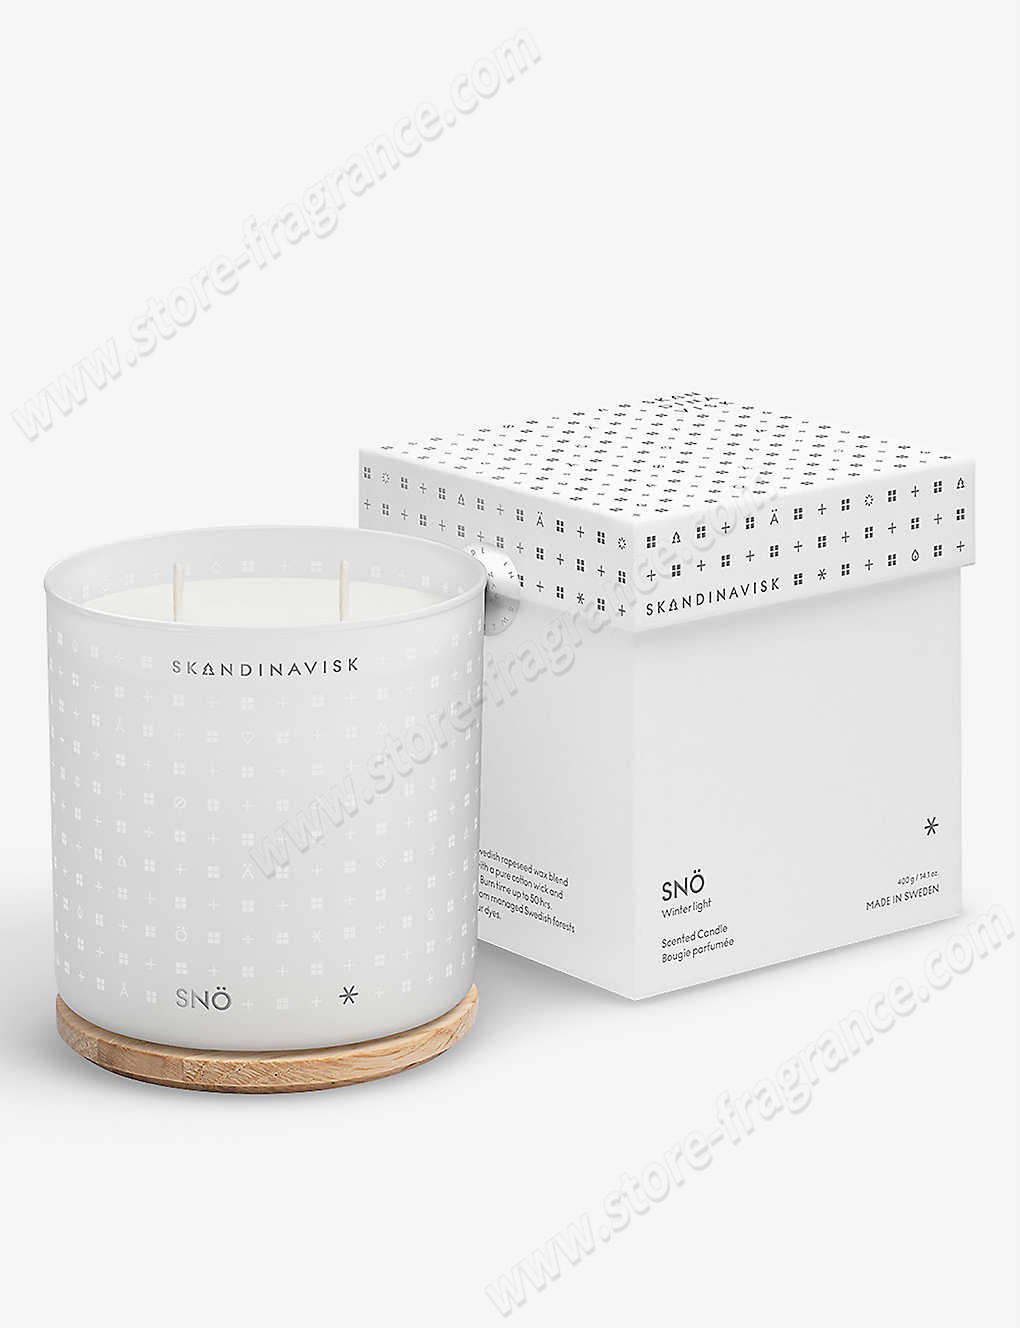 SKANDINAVISK/SNÖ scented candle with lid 400g ✿ Discount Store - SKANDINAVISK/SNÖ scented candle with lid 400g ✿ Discount Store